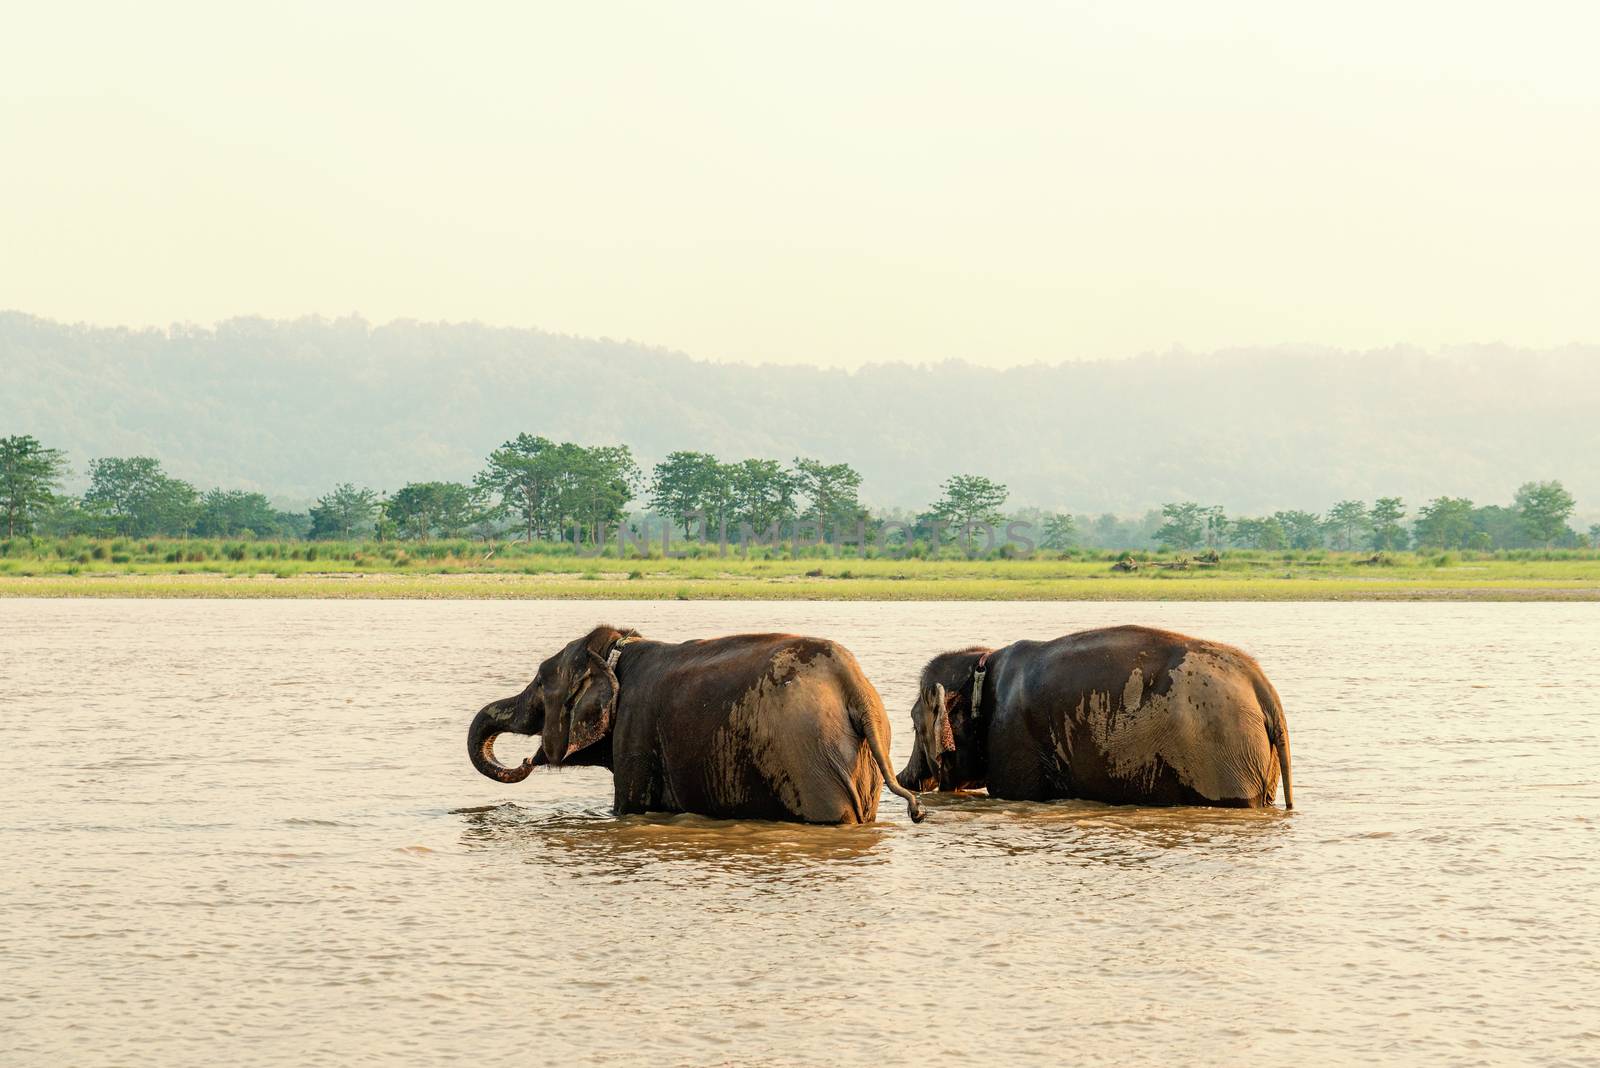 Elephant bathing in Chitwan national park, Nepal by dutourdumonde